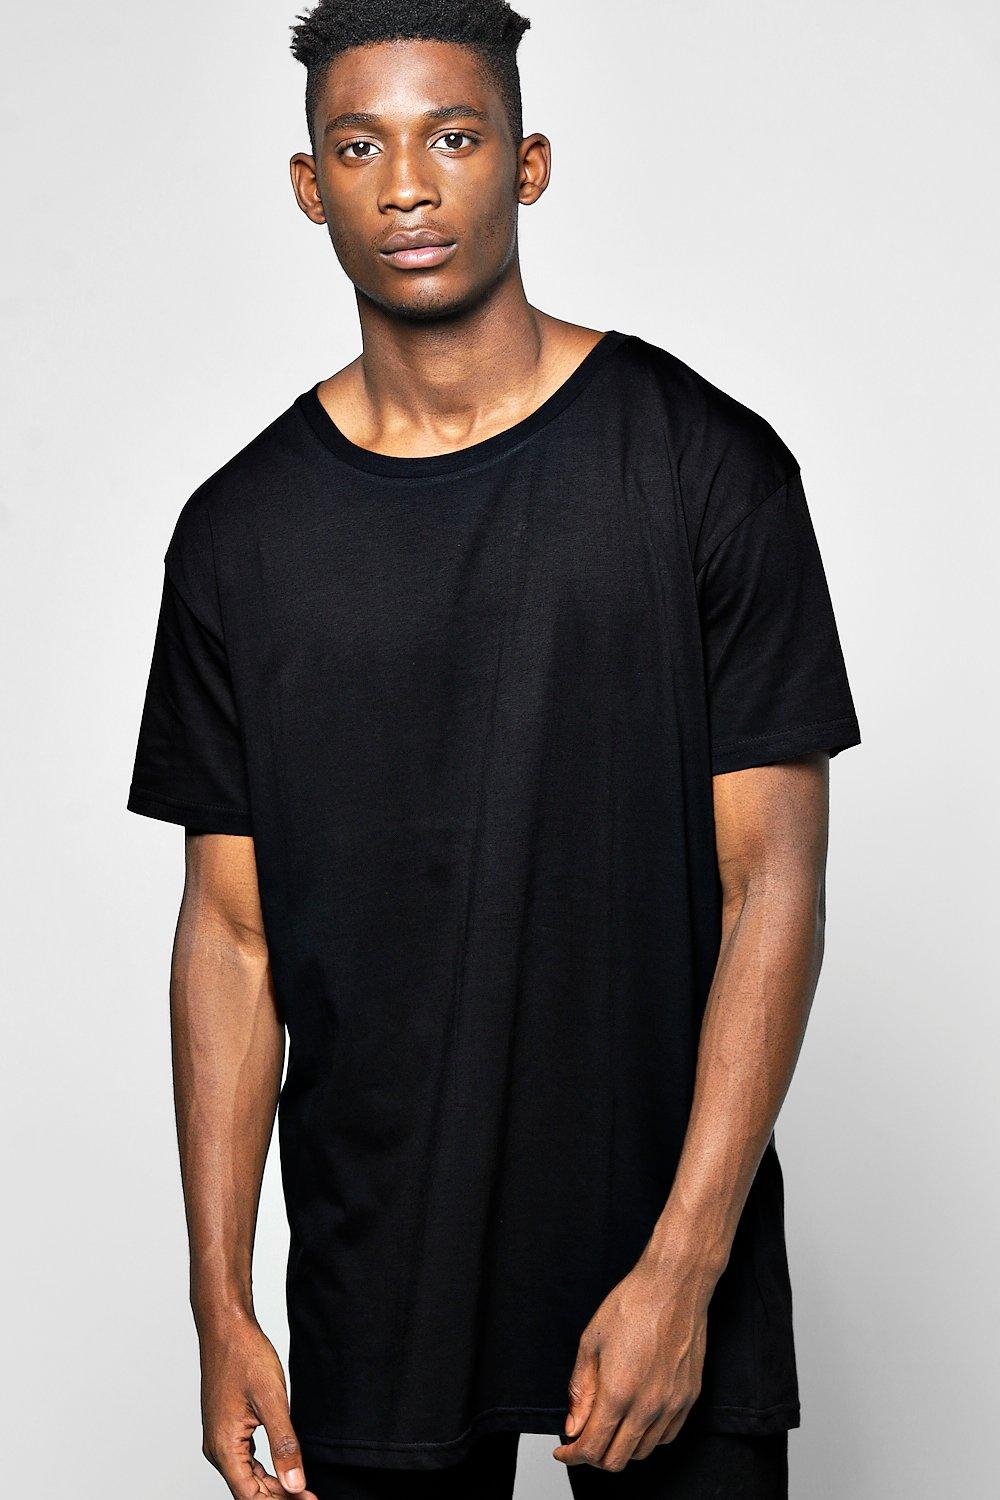 Boohoo Mens Longline T Shirt With Scoop Hem | eBay